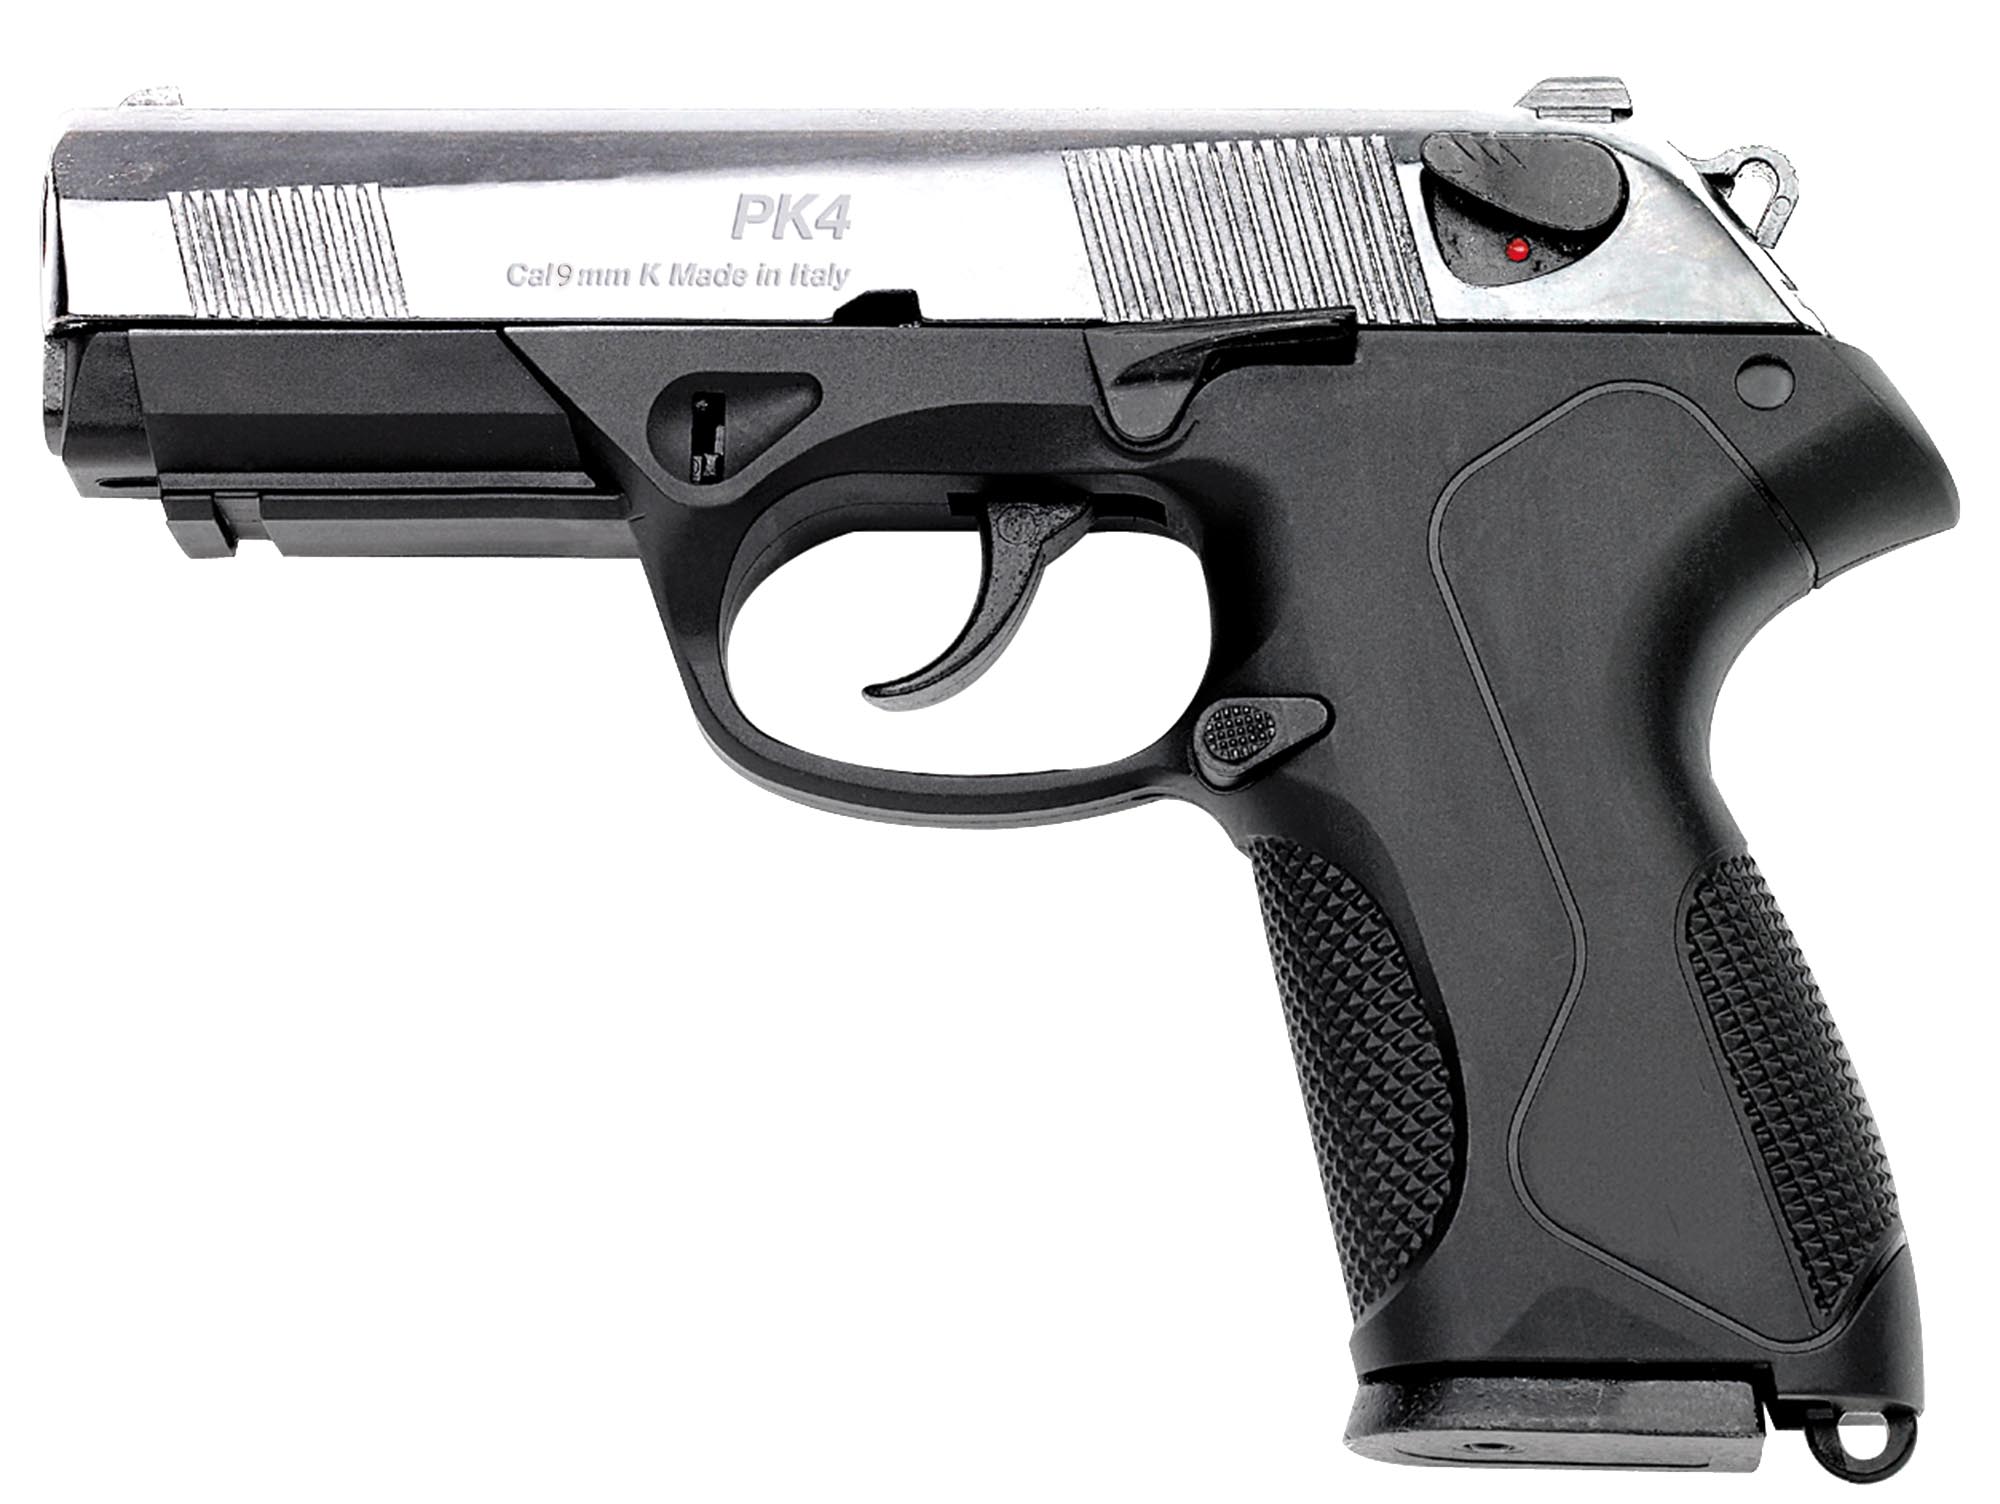 eaab248-chiappa-pistolet-9-mm-a-blanc-pk4-bicolore-noir_1